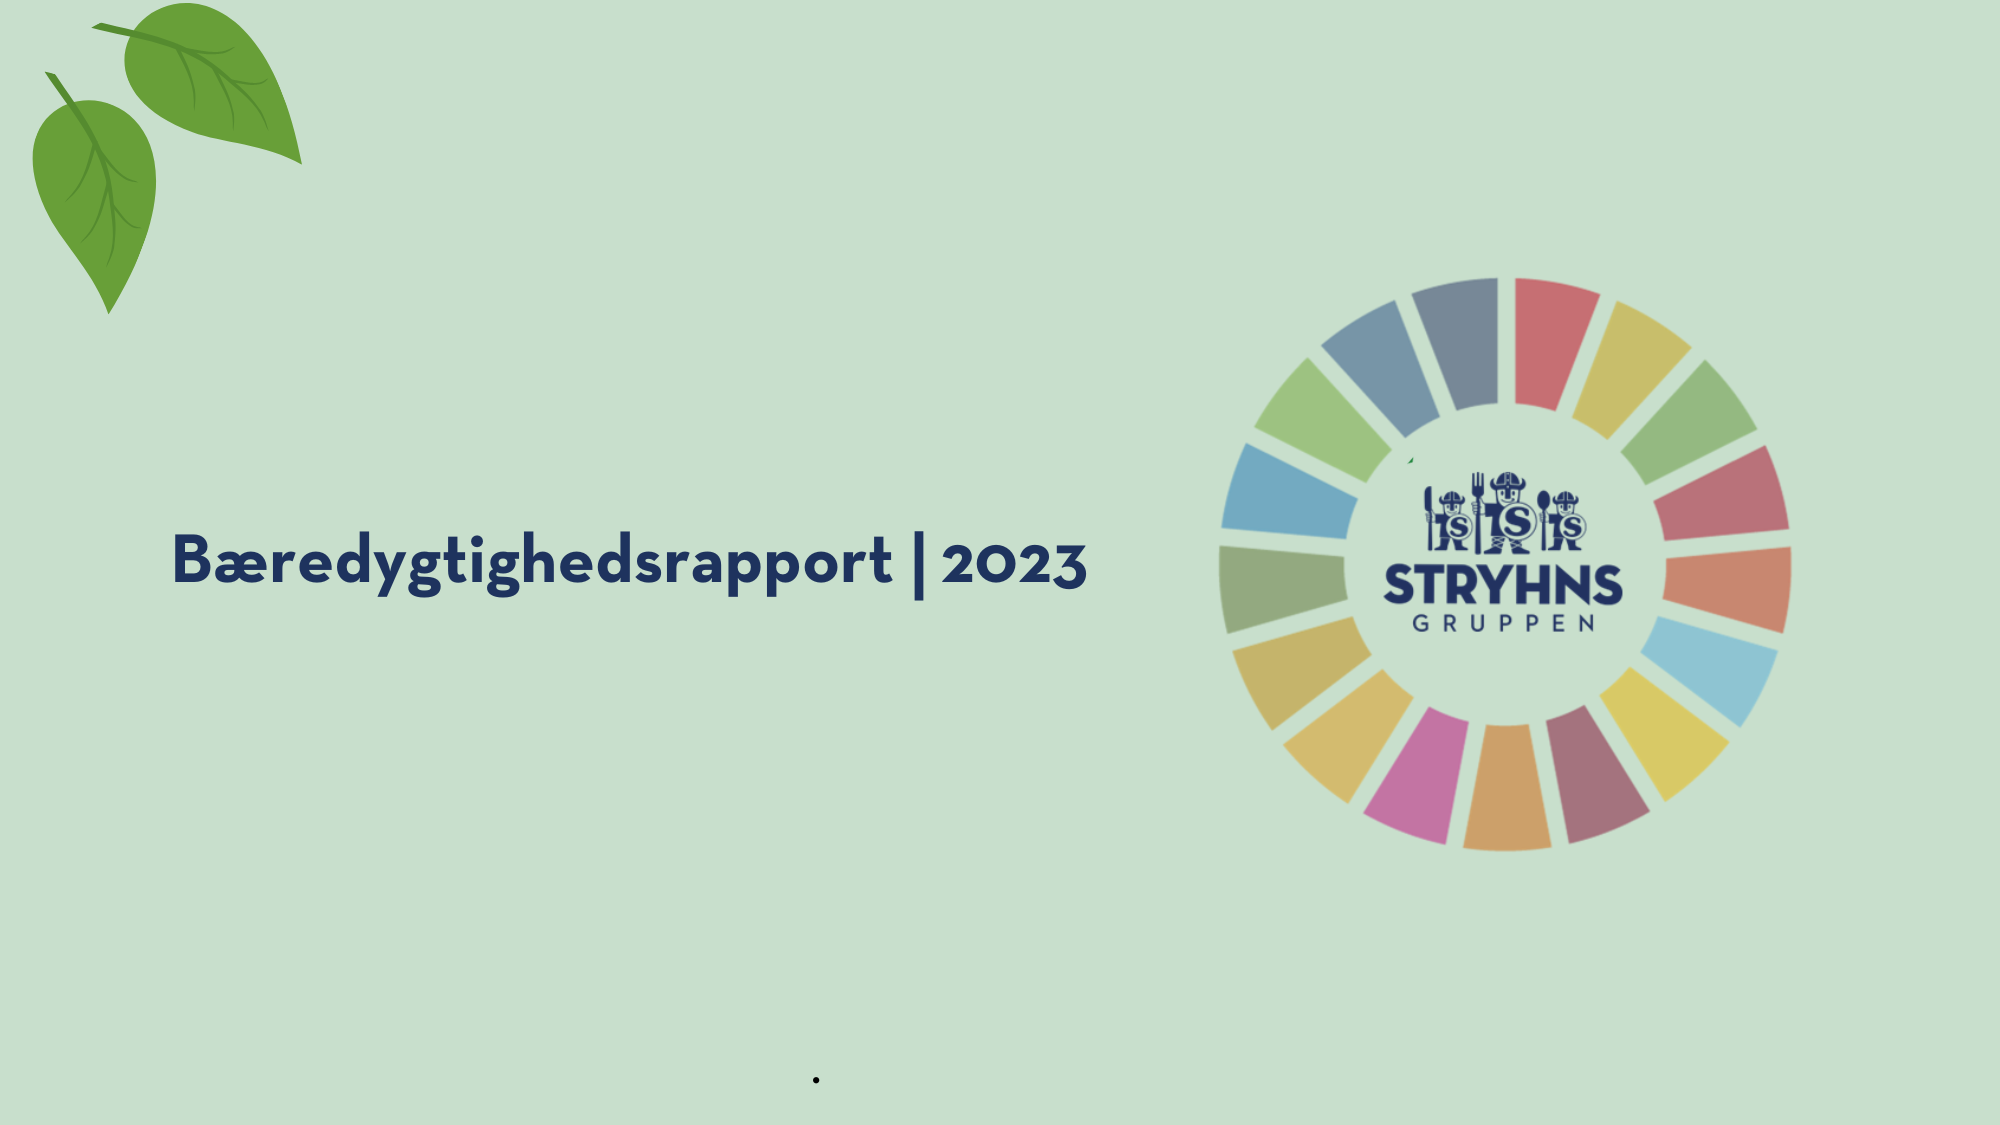 Stryhns Gruppens bæredygtighedsrapport 2023